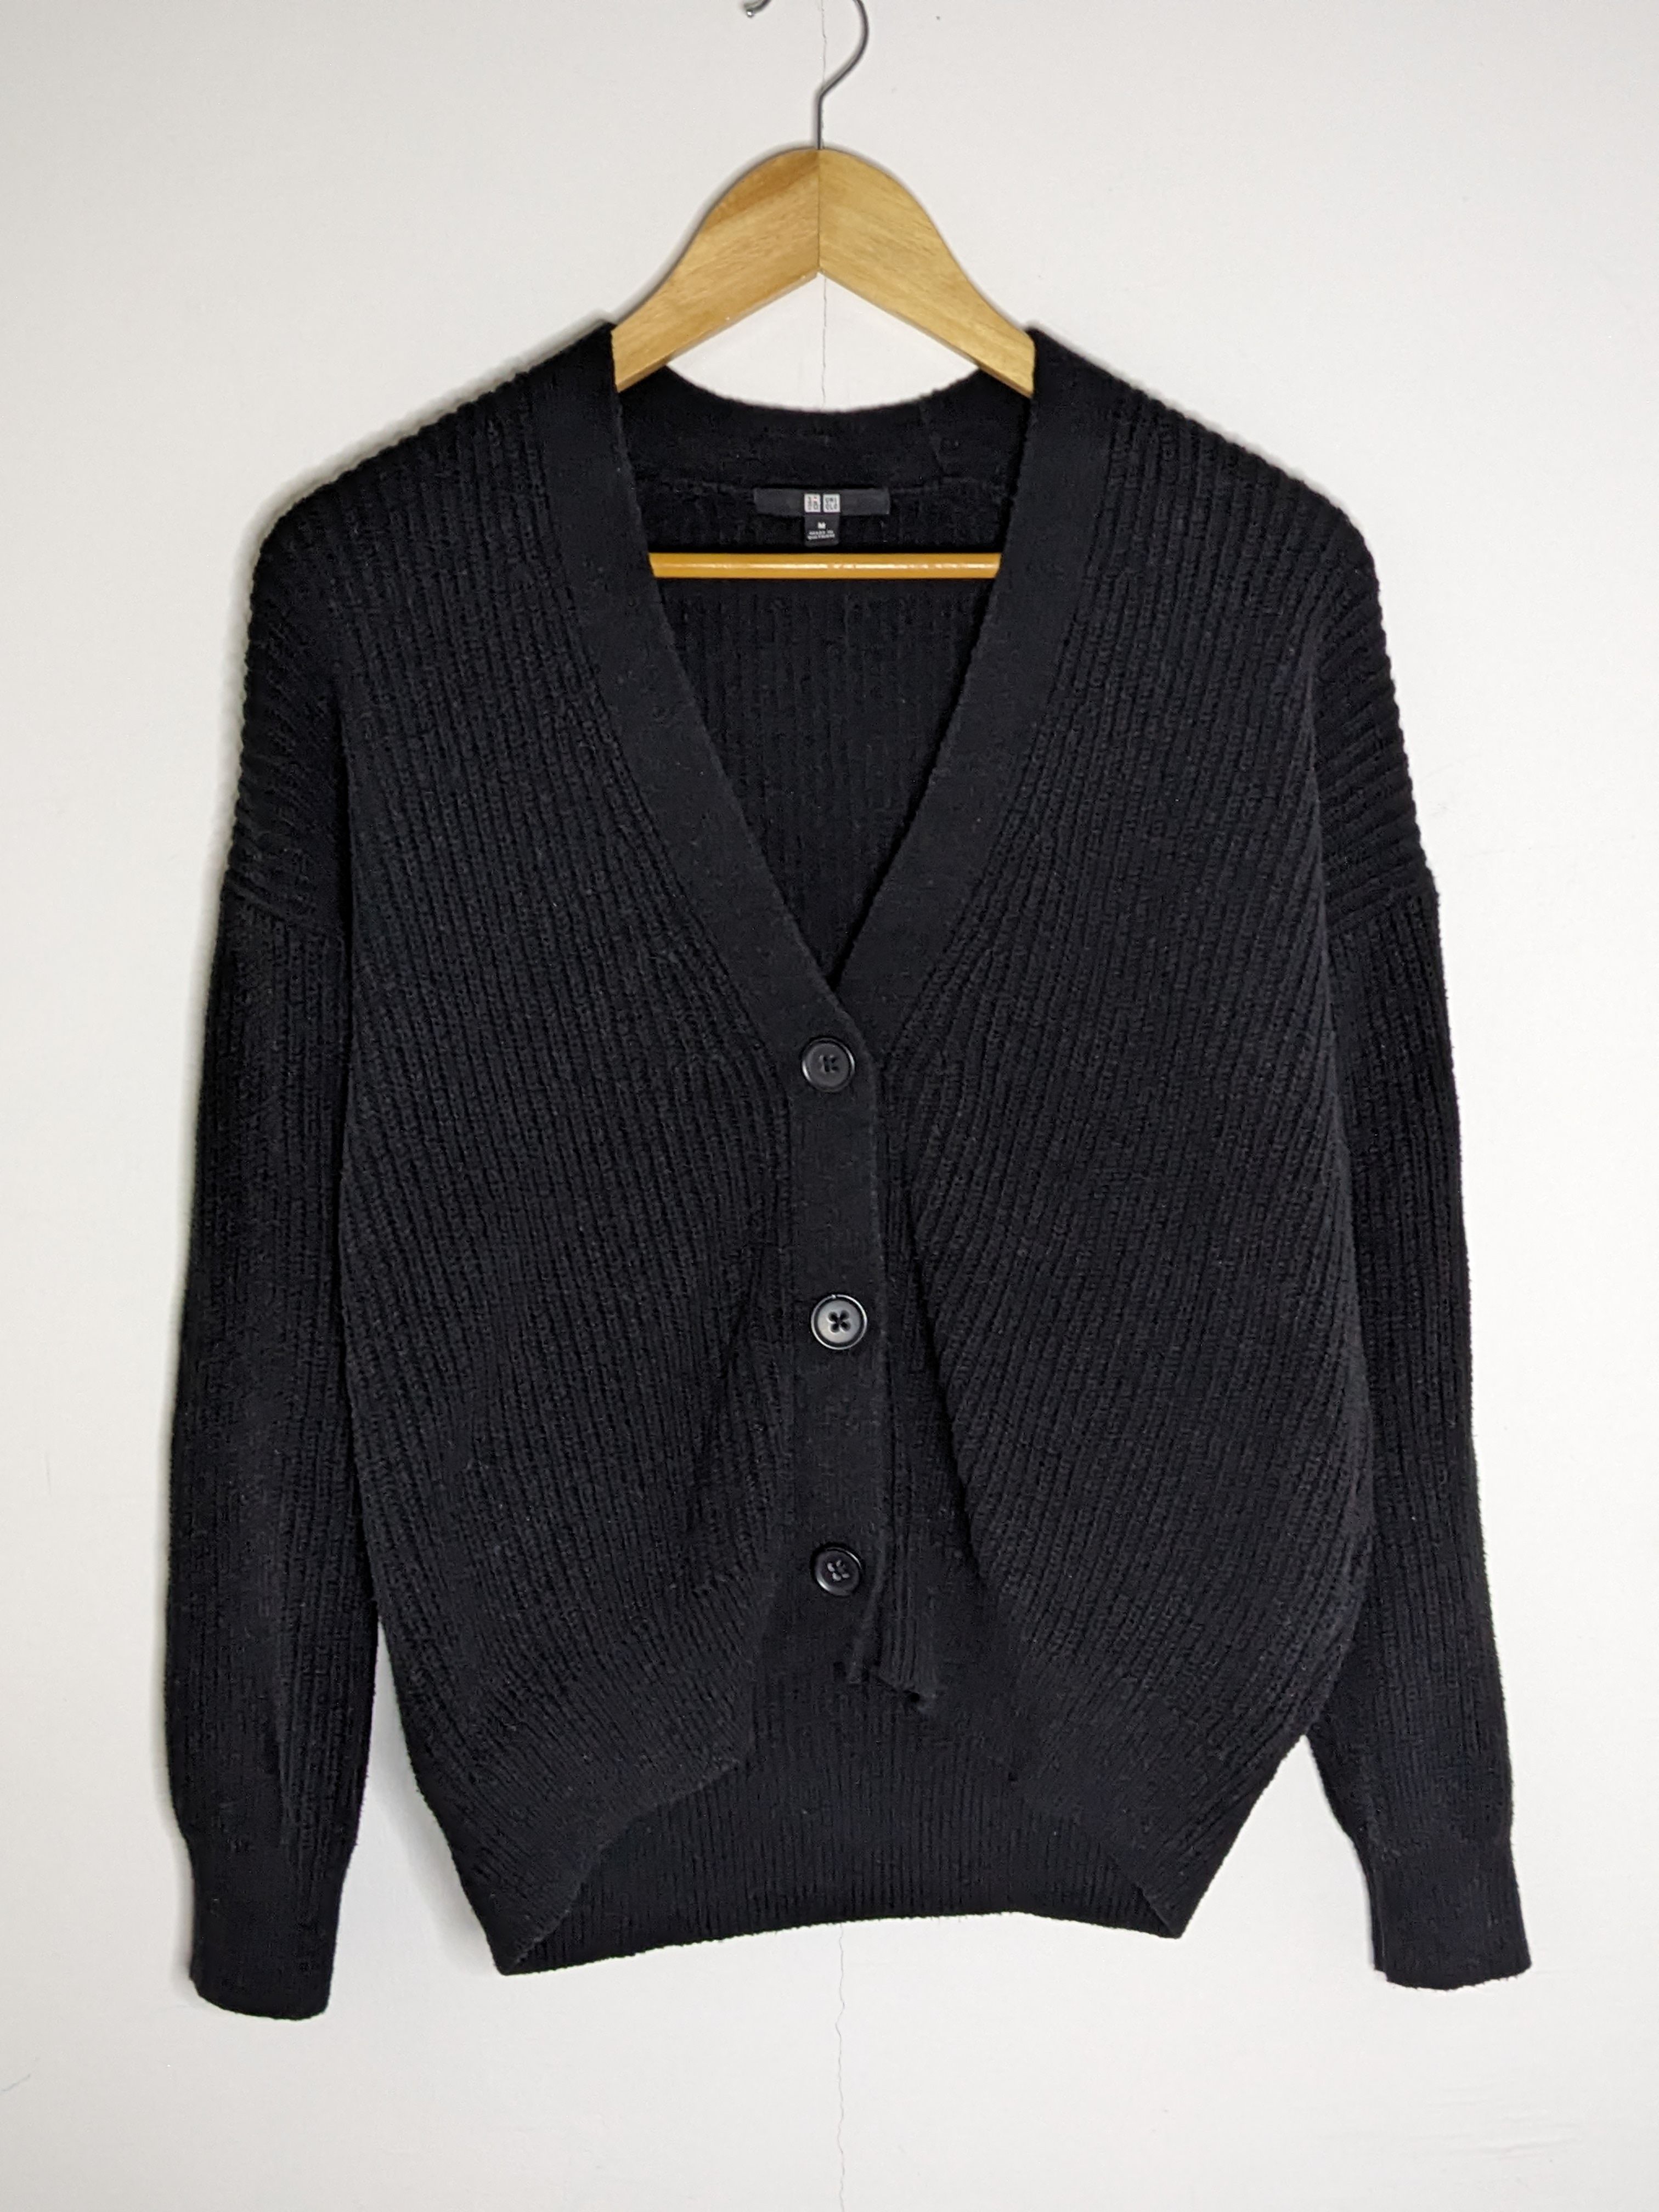 Uniqlo Crocheted Pattern Cotton Knit Sweater Black Cardigan - 1